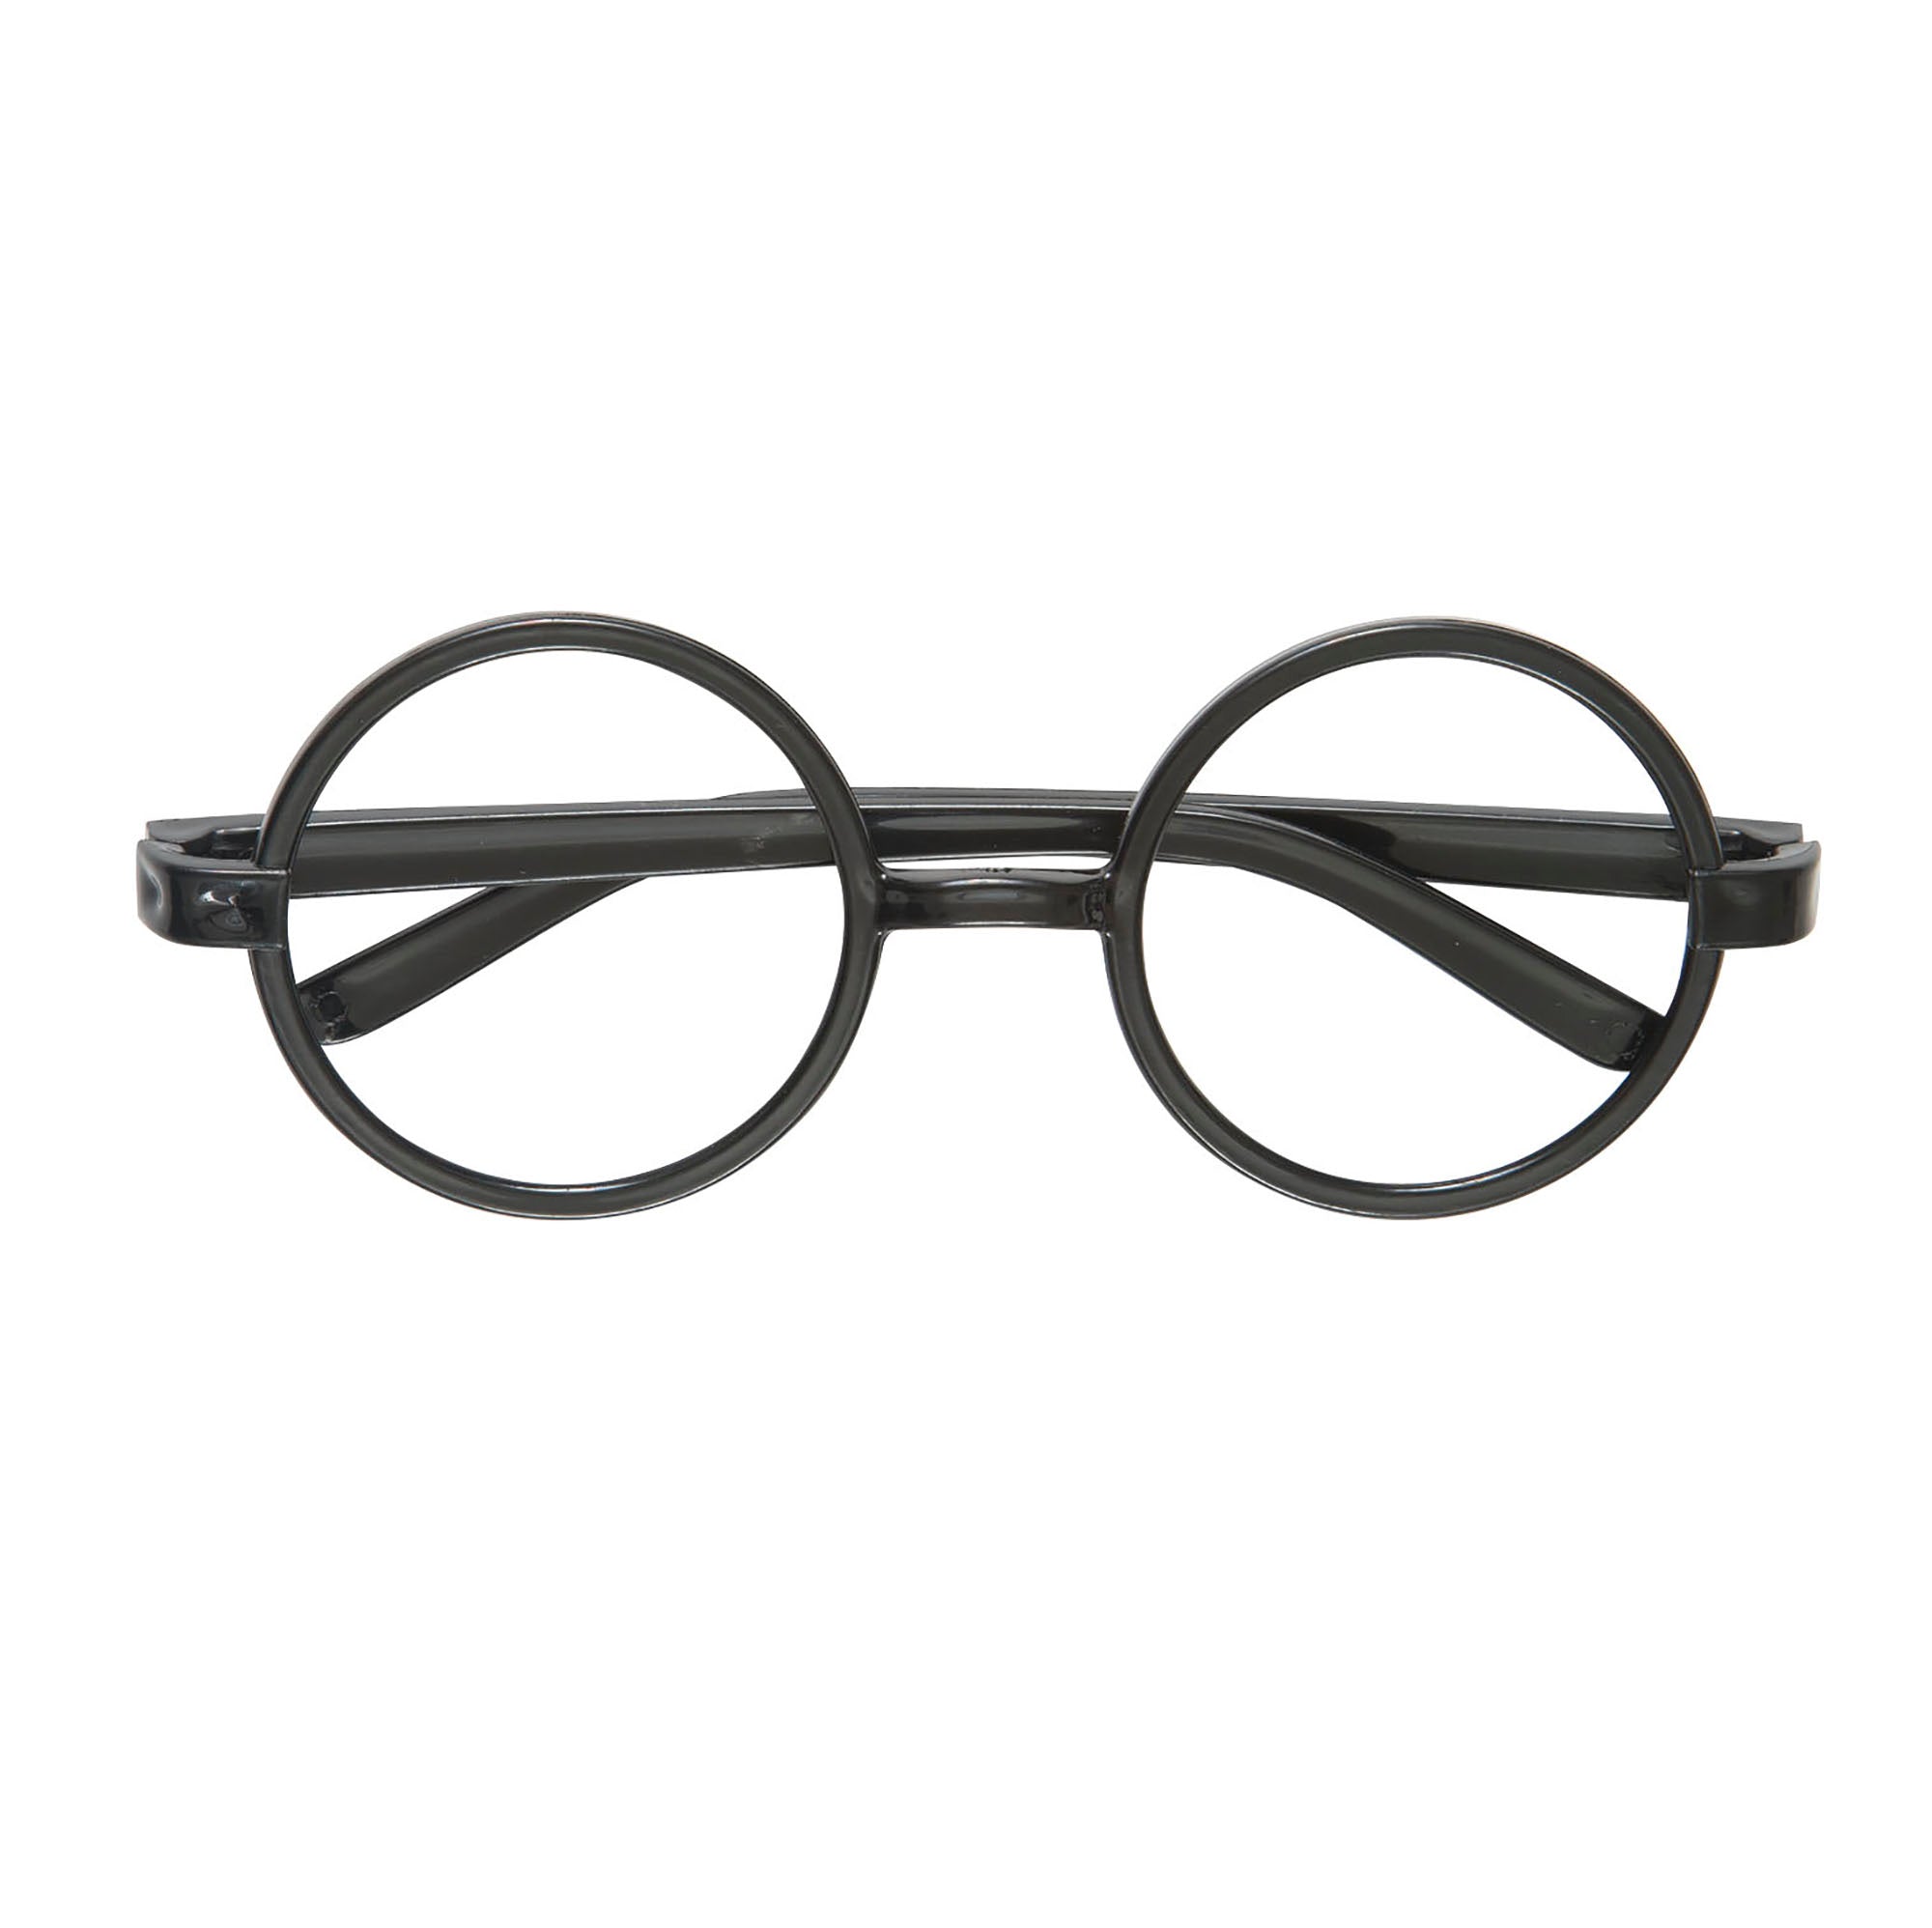 Harry Potter 4 Novelty Glasses